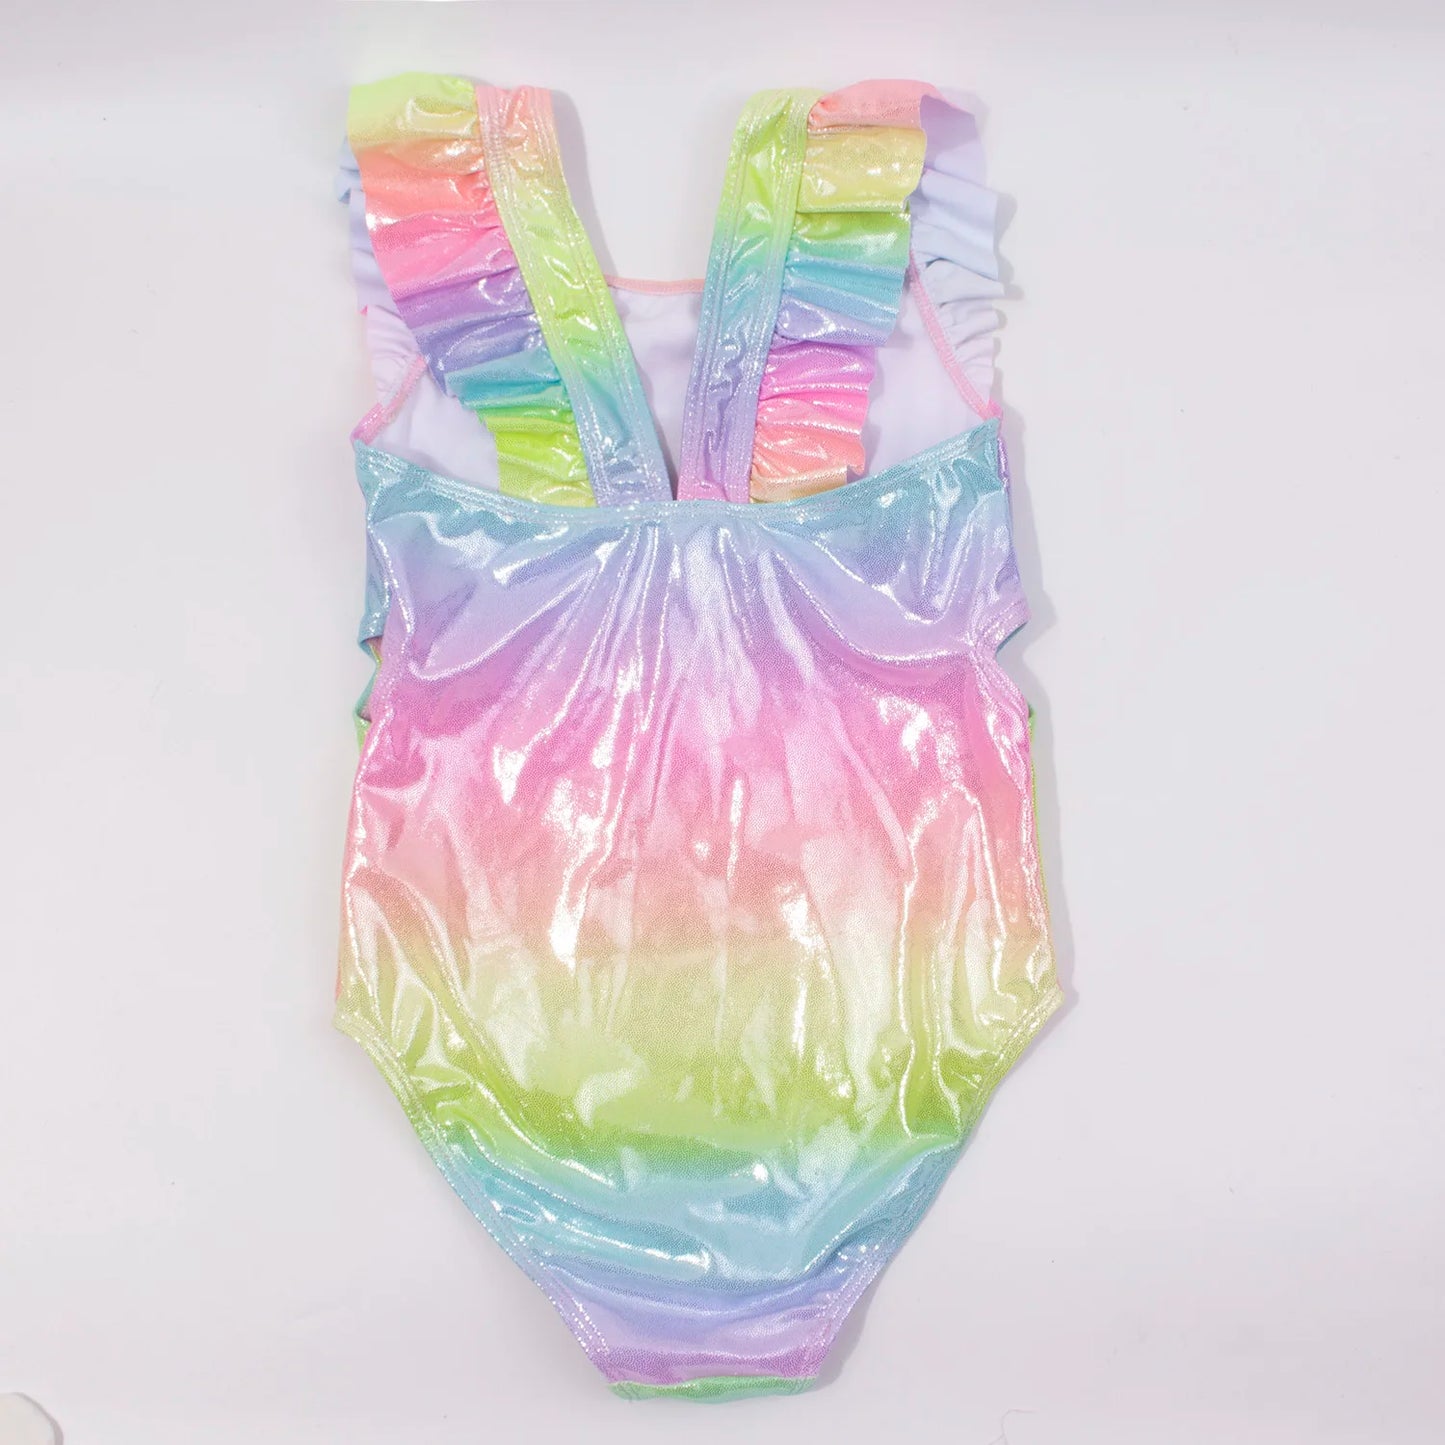 Girls One-Piece Unicorn and Rainbow Sequin Swimsuit